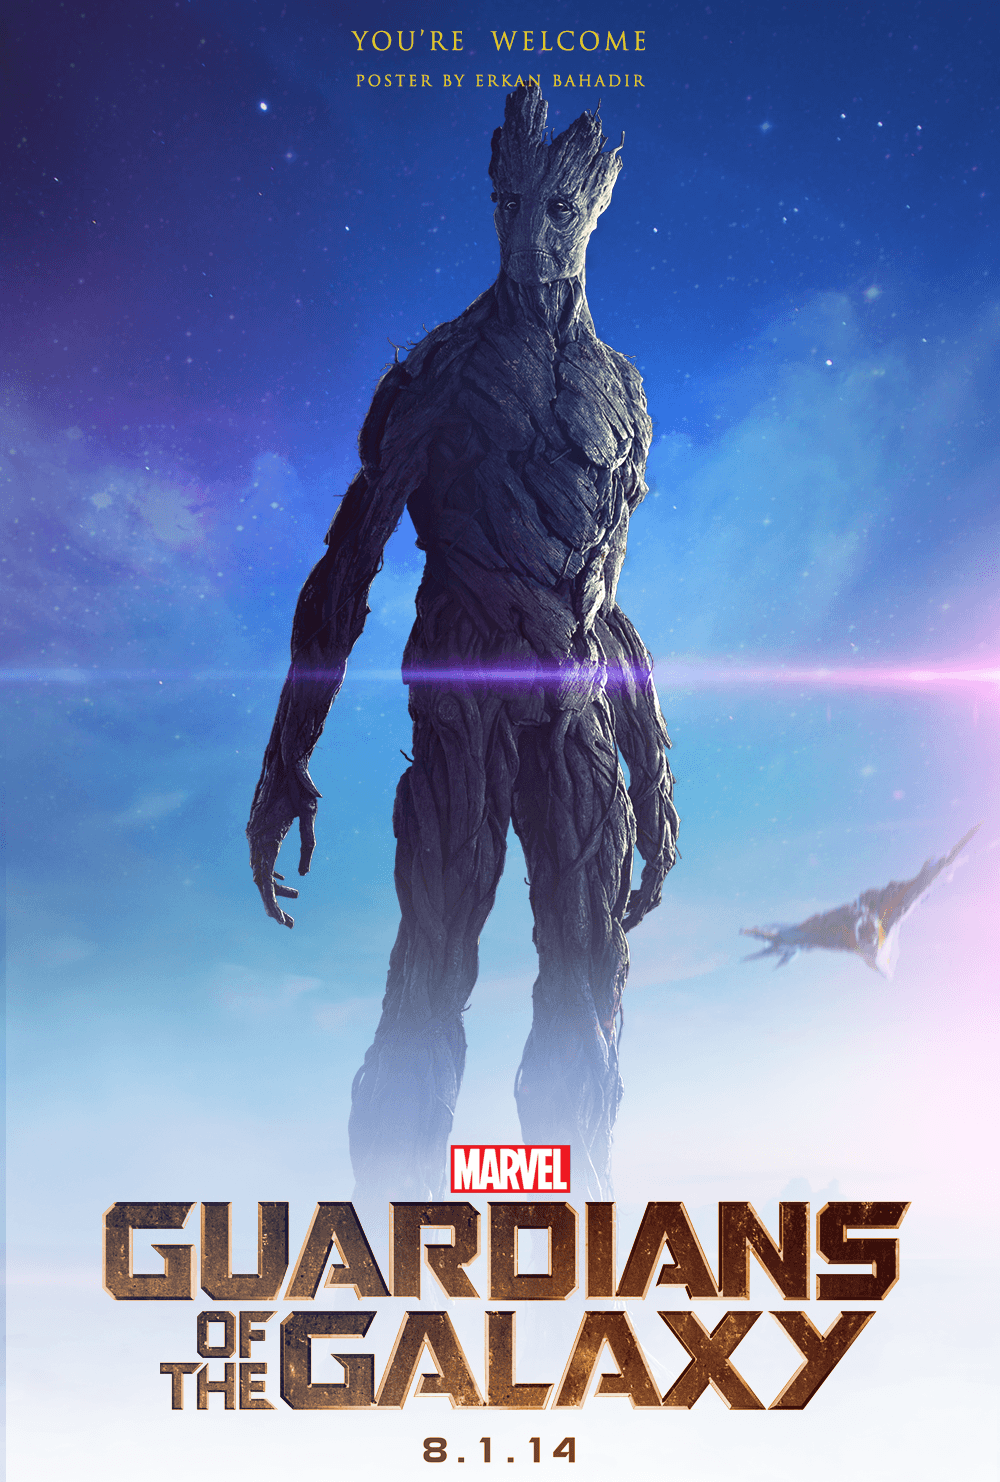 Guardians of the Galaxy: Groot Poster by erkanbahadir23 on DeviantArt